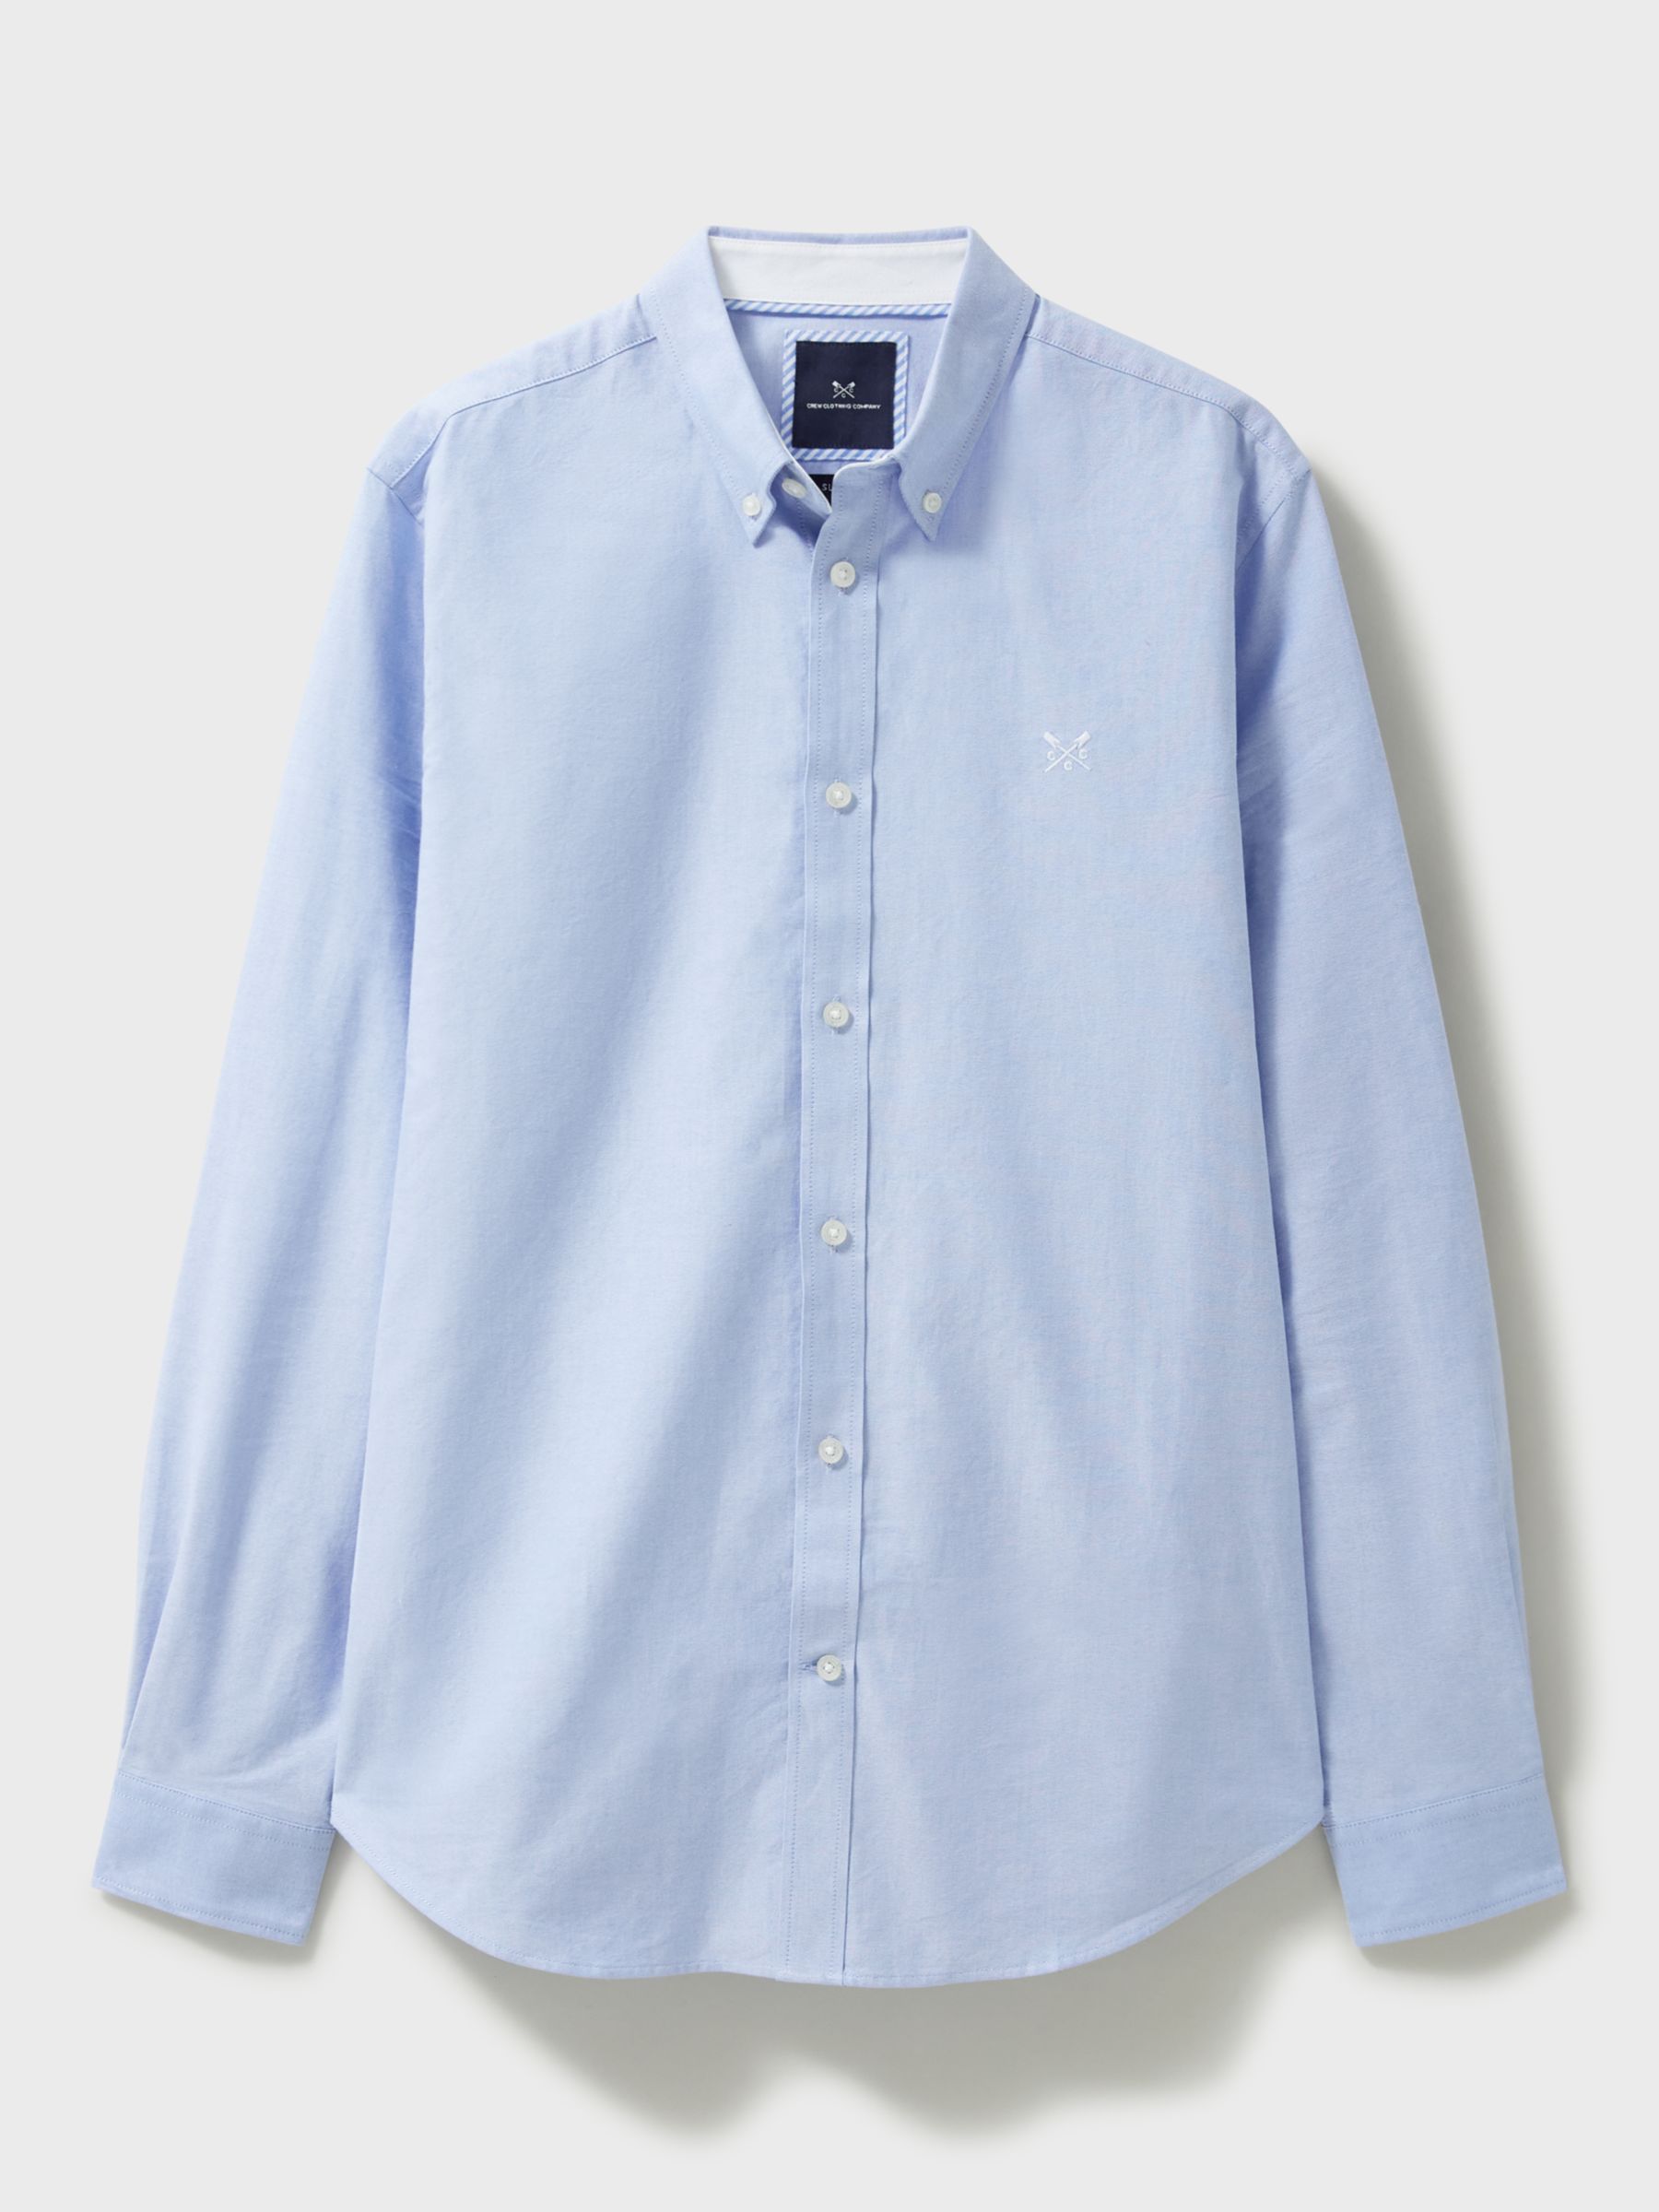 Crew Clothing Slim Fit Oxford Shirt, Light Blue, L